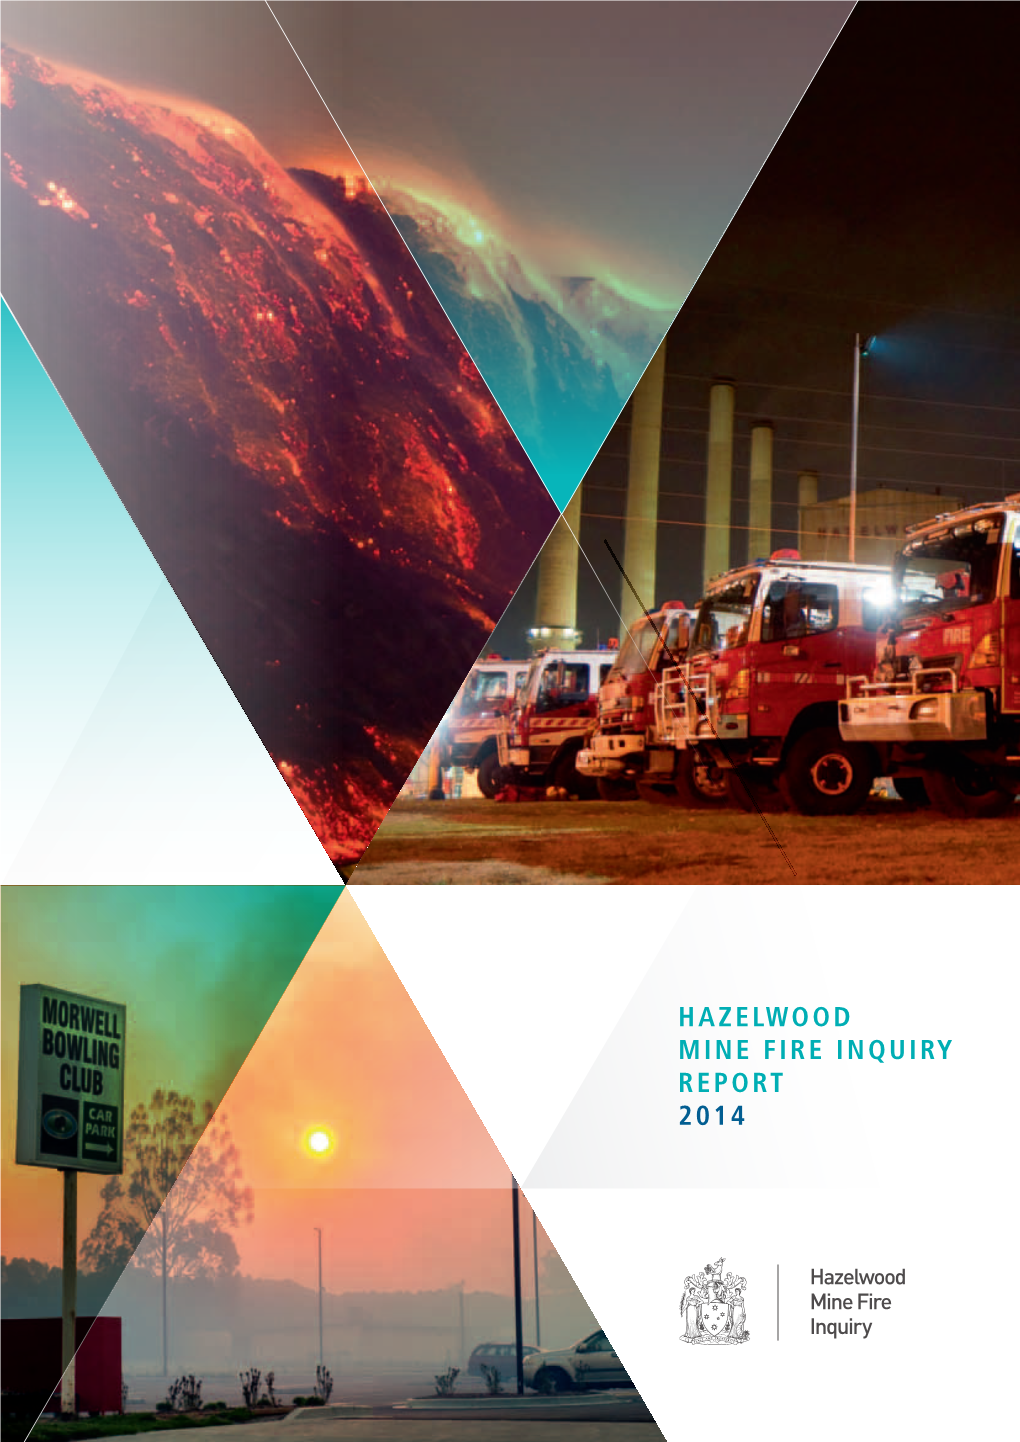 Hazelwood Mine Fire Inquiry Report 2014